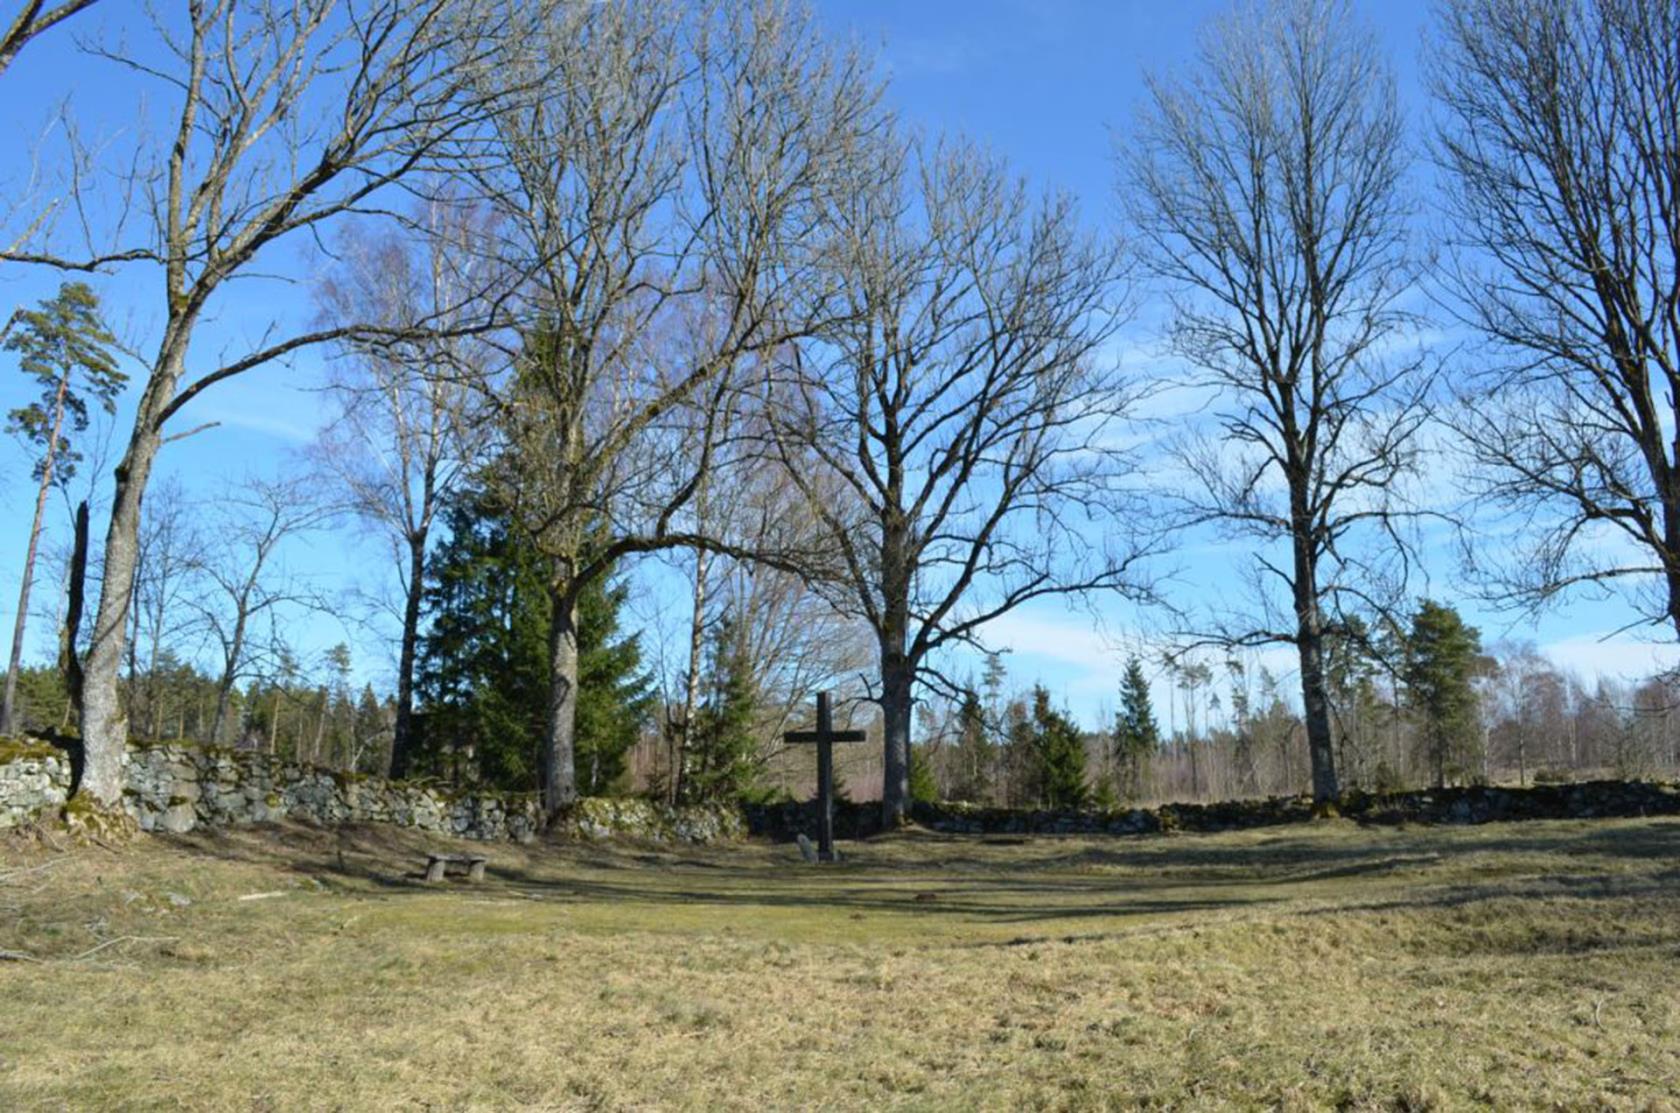 Kalvsviks gamla kyrkogård